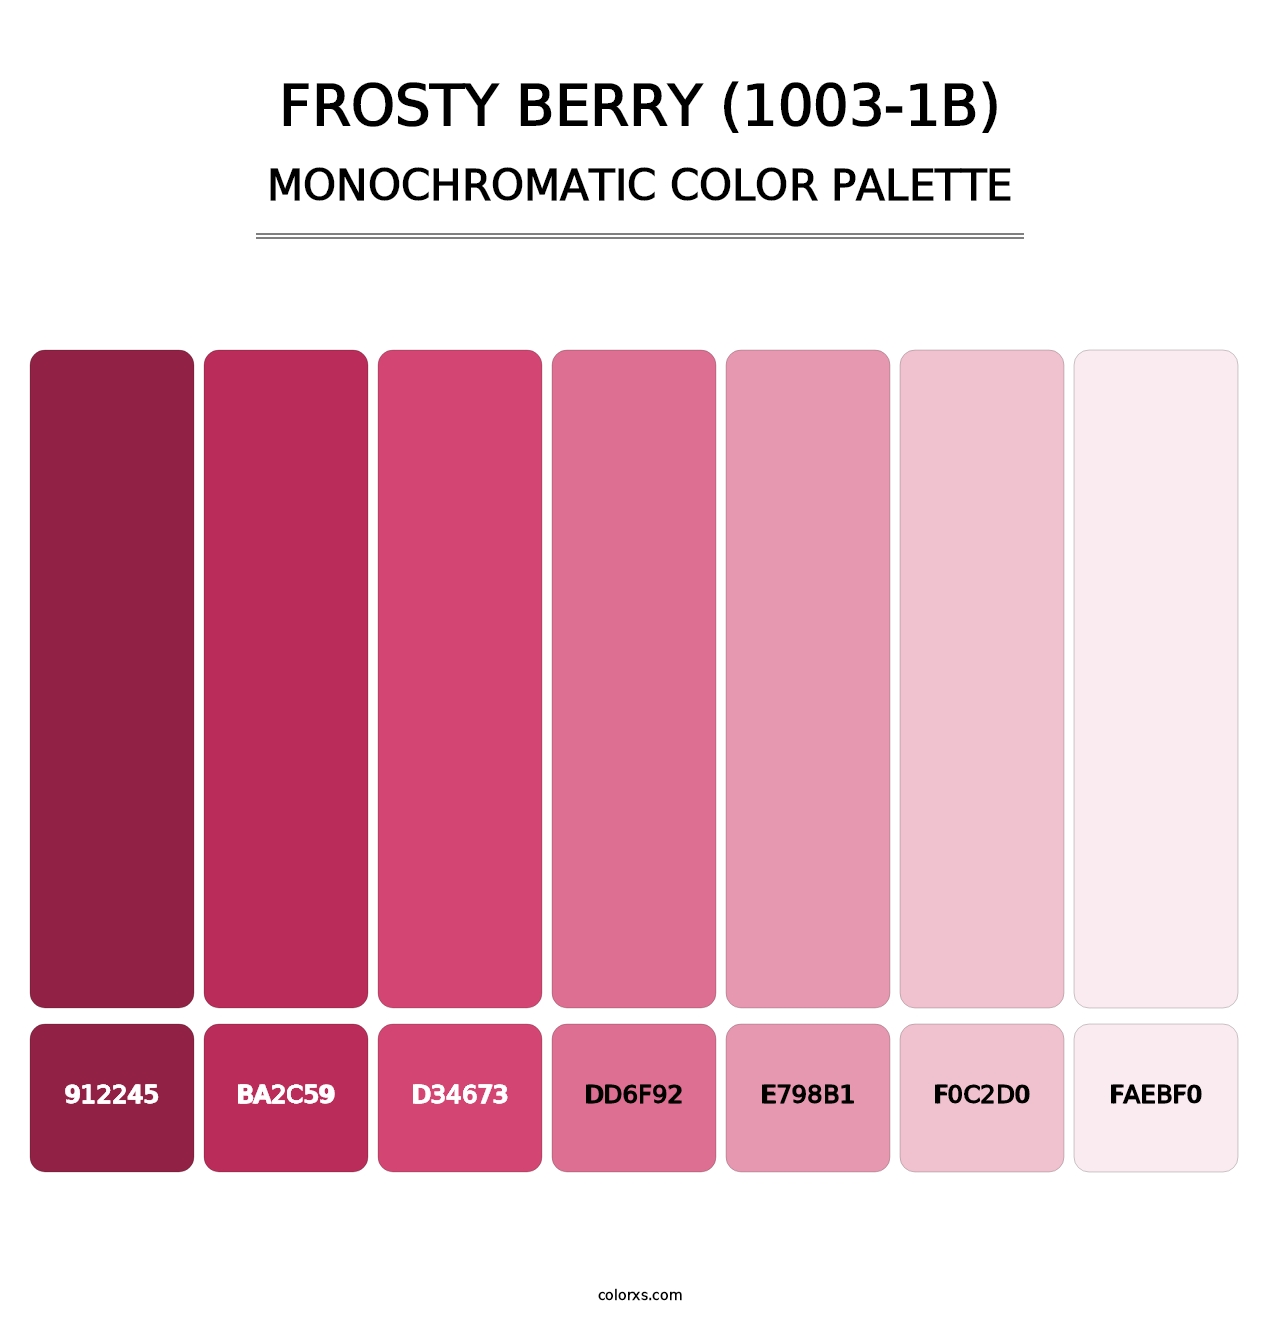 Frosty Berry (1003-1B) - Monochromatic Color Palette